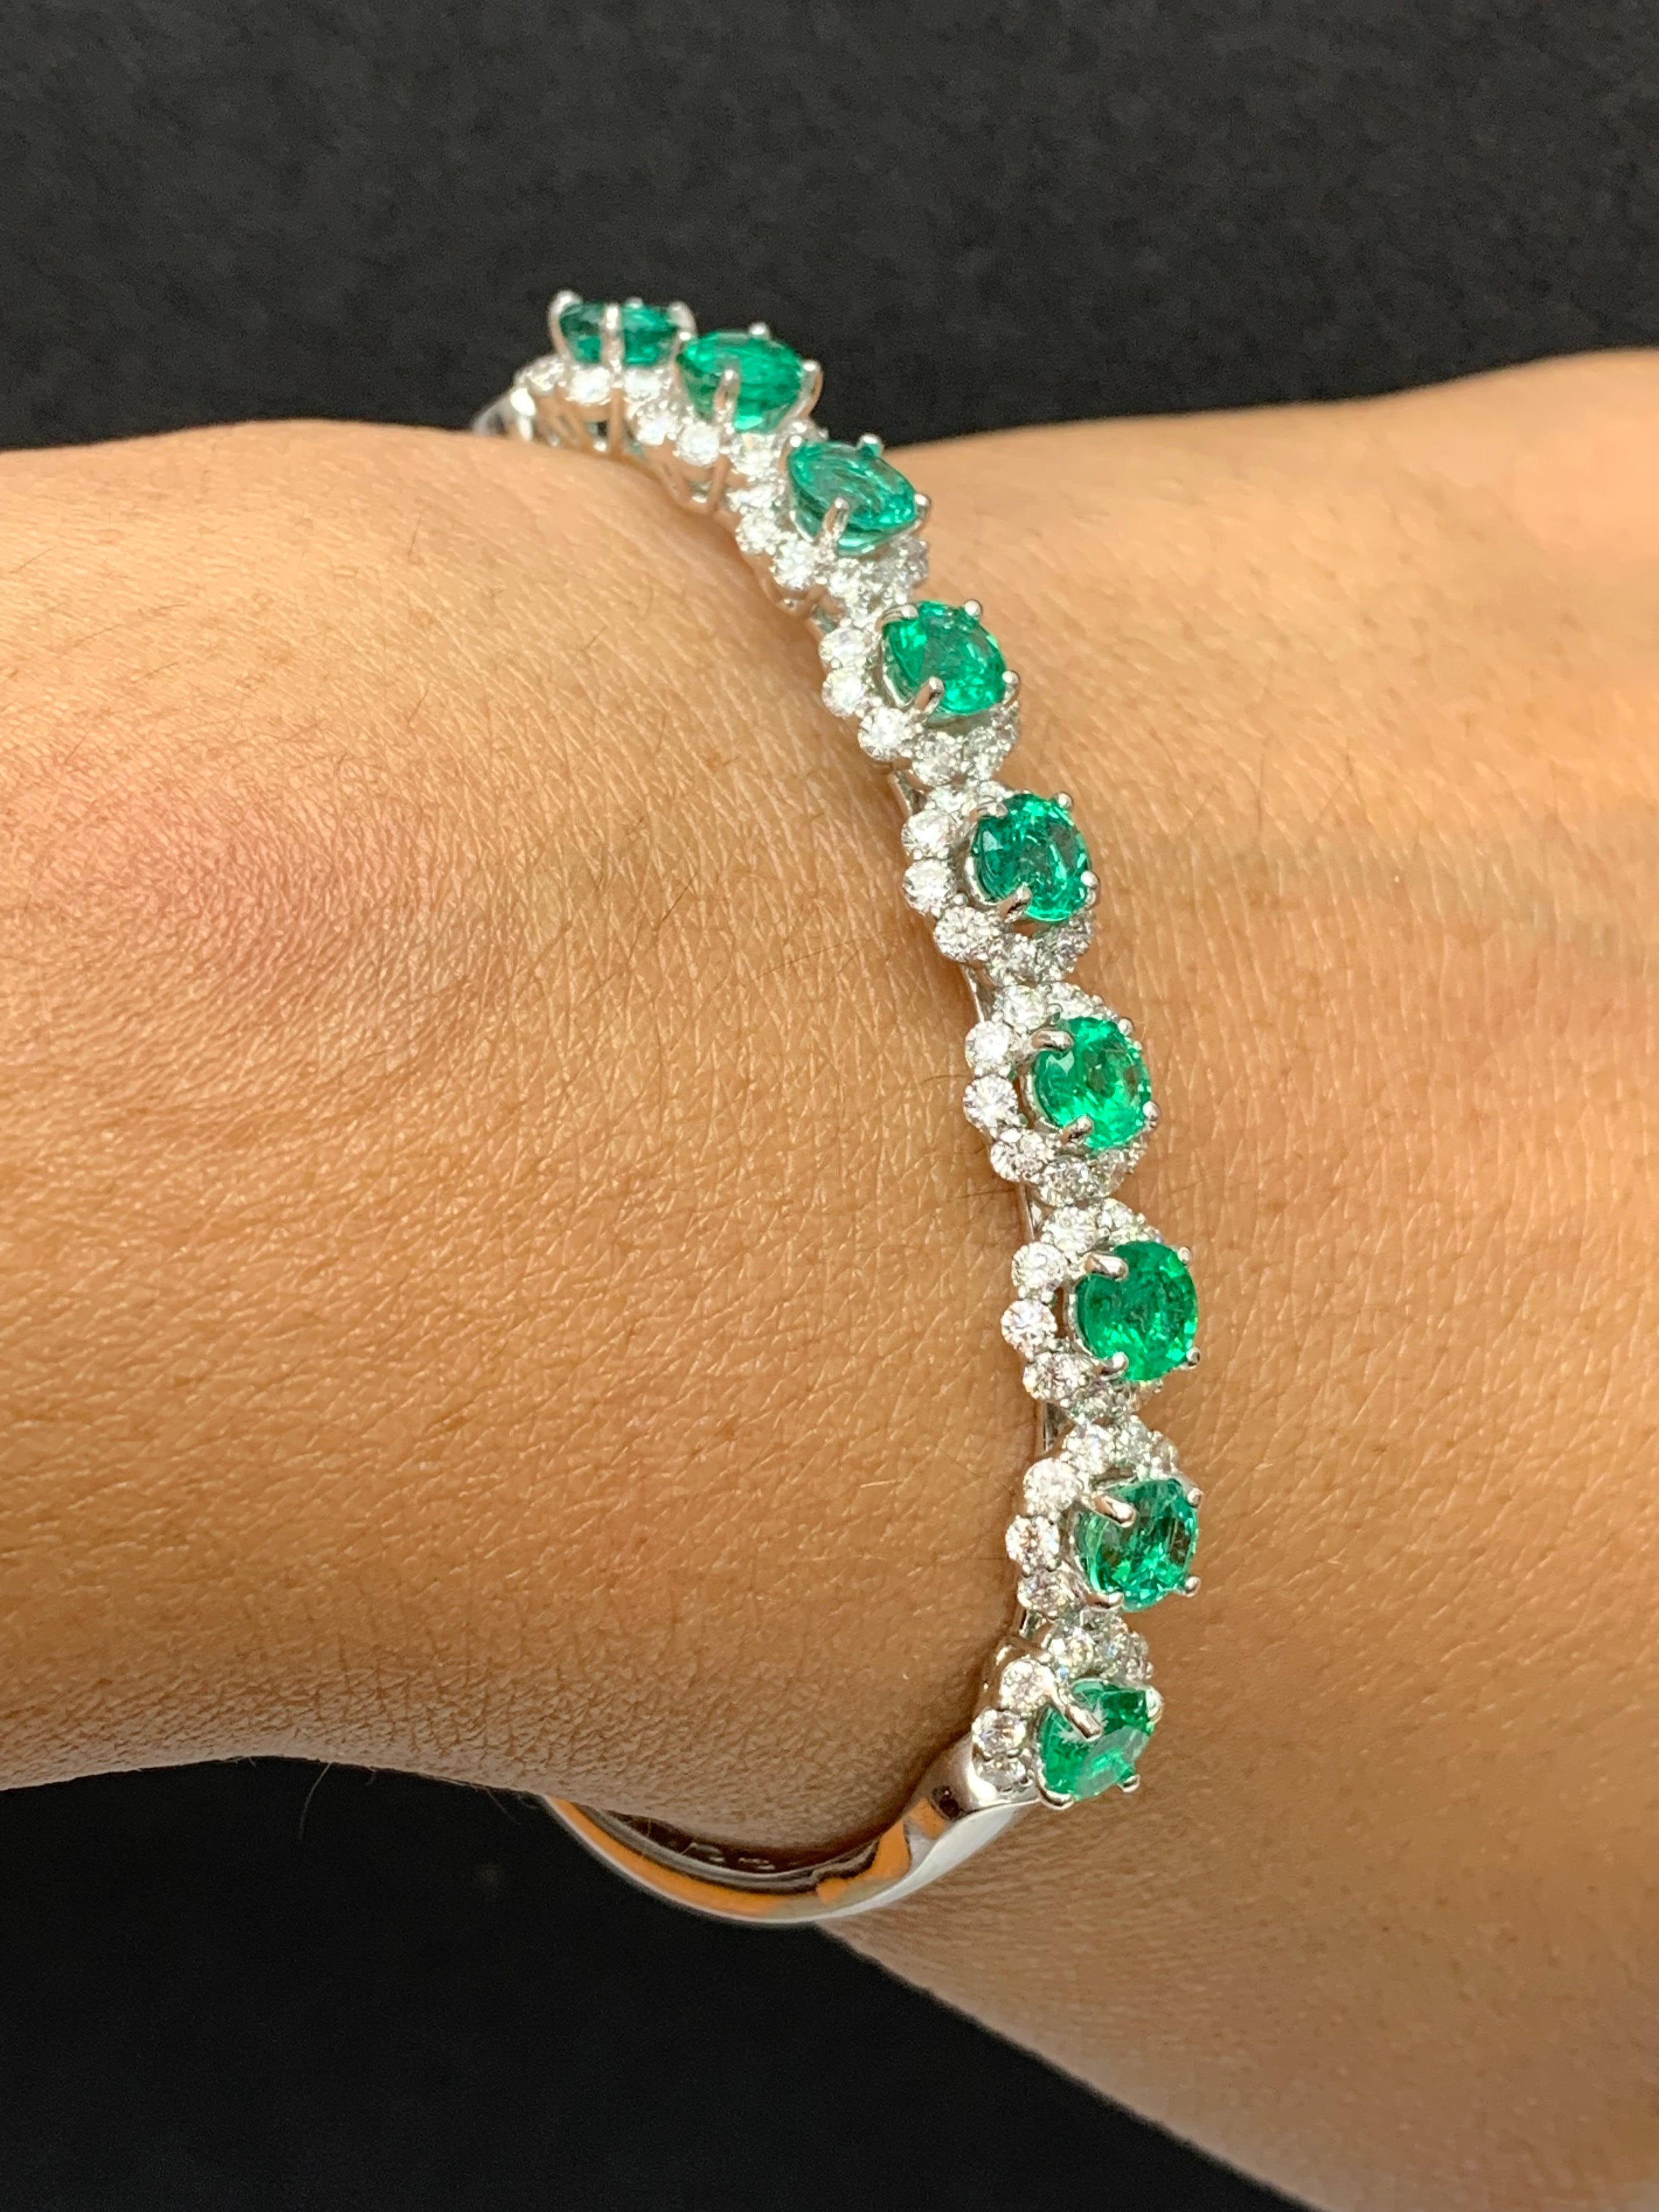 Contemporary 3.97 Carat Brilliant Cut Emerald and Diamond Bangle Bracelet in 18k White Gold For Sale